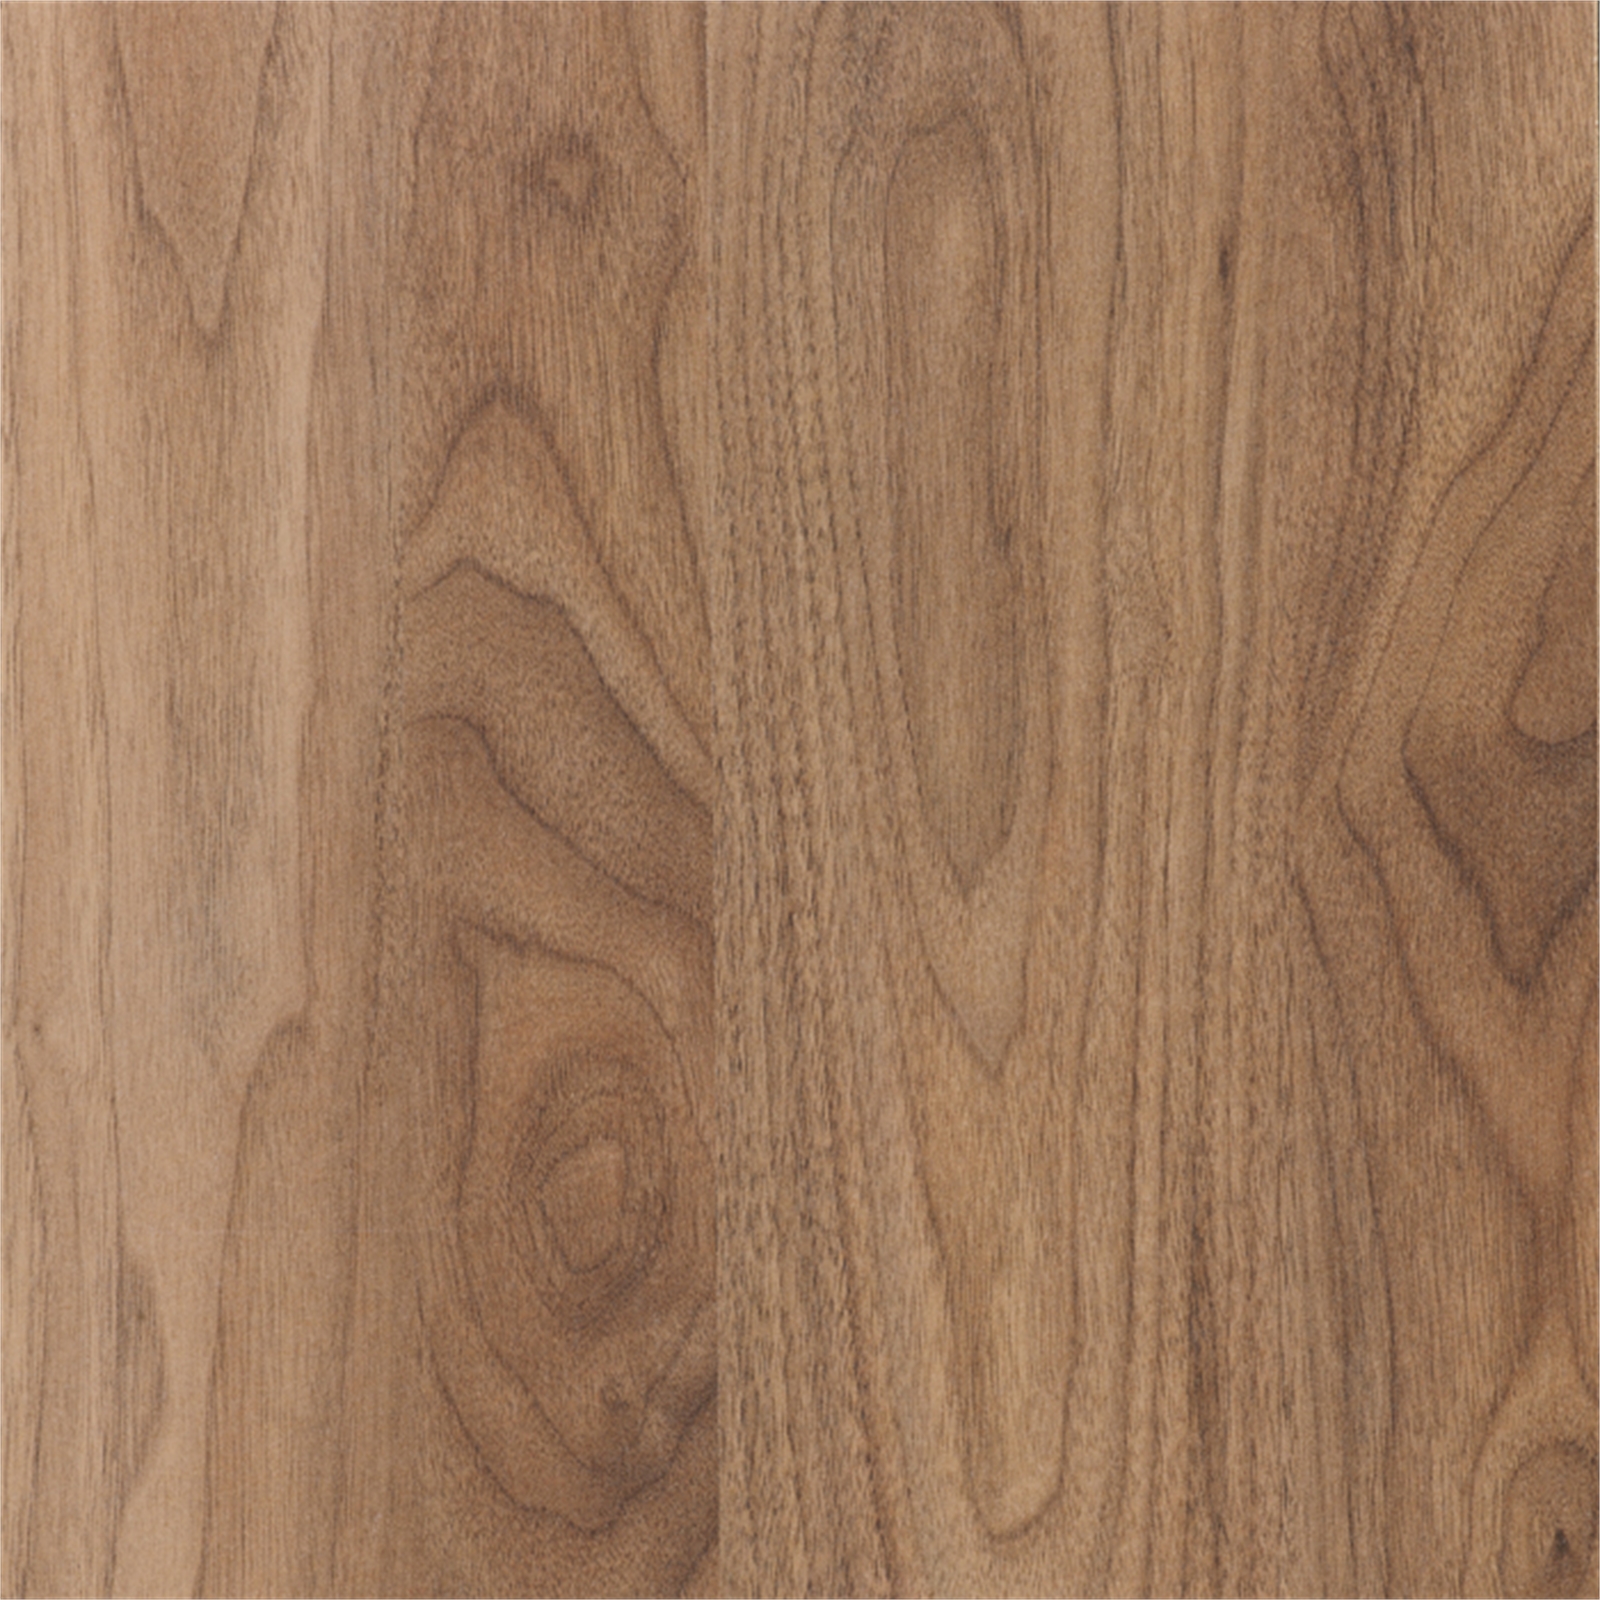 Formica 8mm Golden Wattle Laminate Flooring